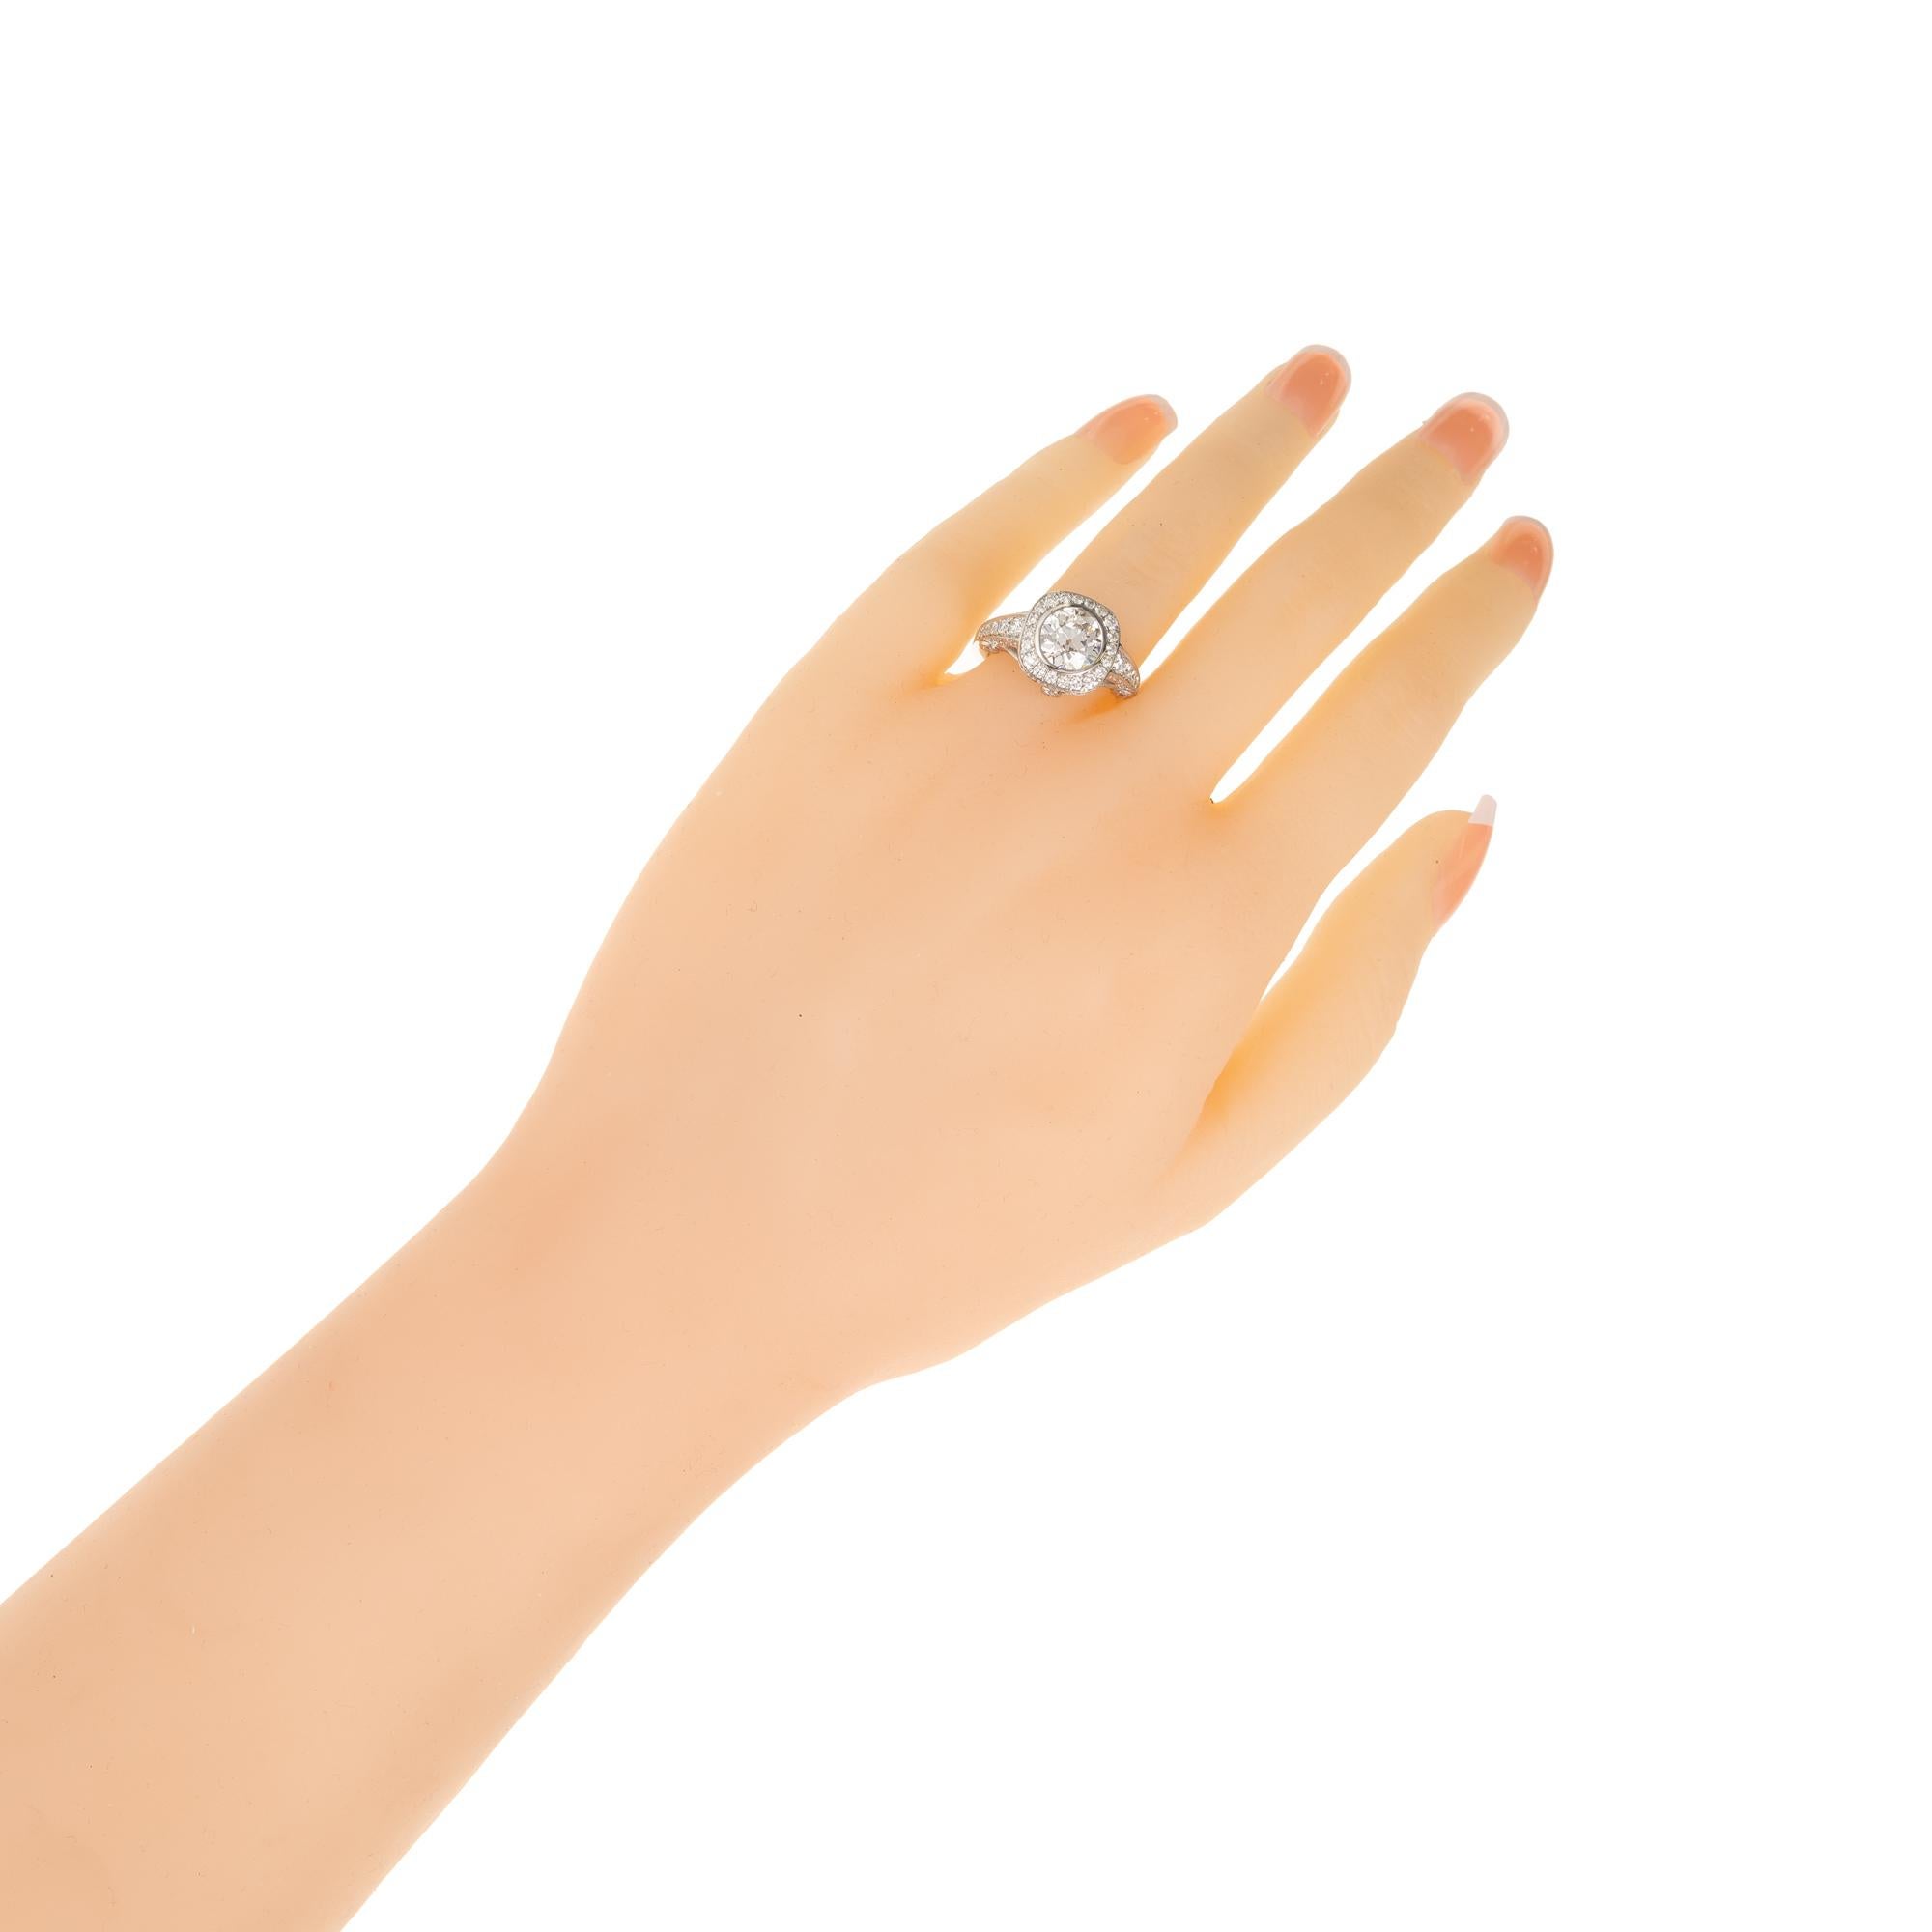 Peter Suchy 1.98 Carat Old European Cut Diamond Halo Platinum Engagement Ring For Sale 1